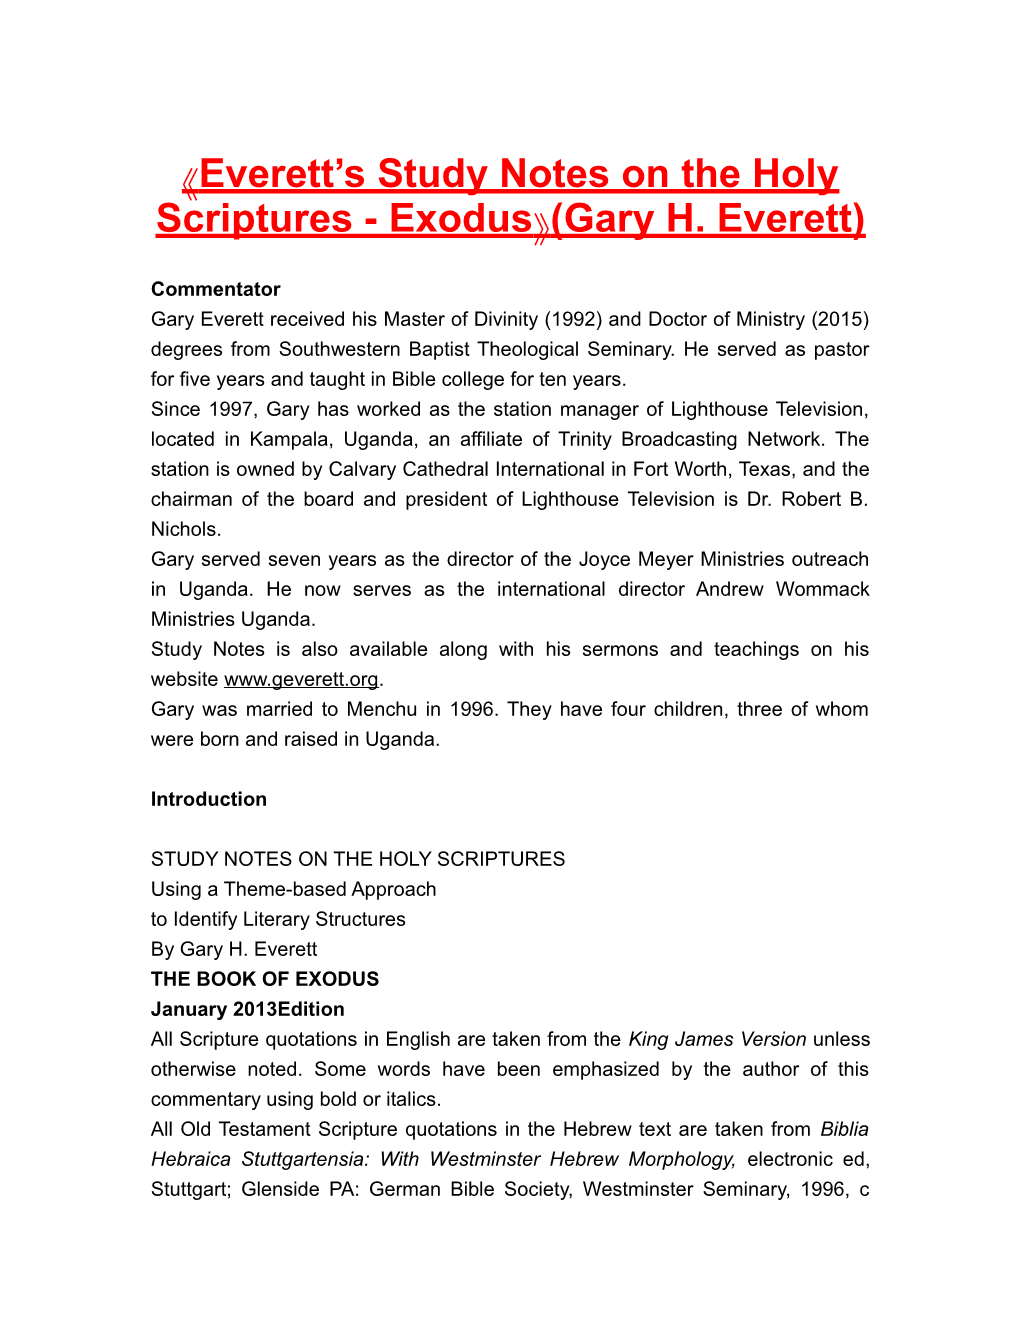 Everett S Study Notes on the Holy Scriptures - Exodus (Gary H. Everett)